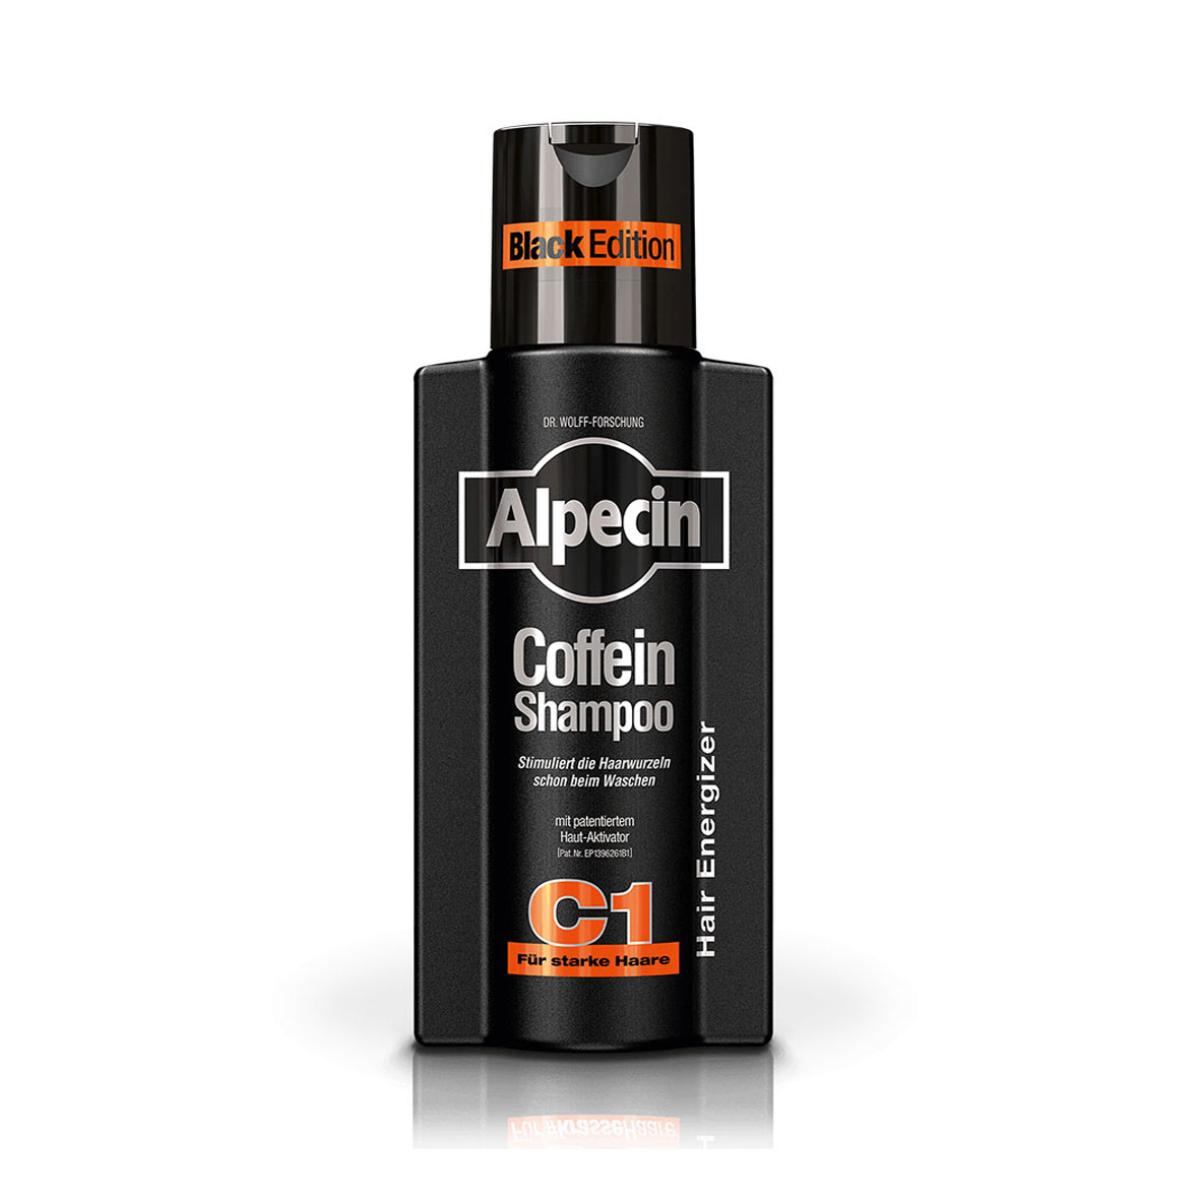 شامپو کافئین C1 بلک ادیشن - Coffein Shampoo C1 Black Edition 250ml